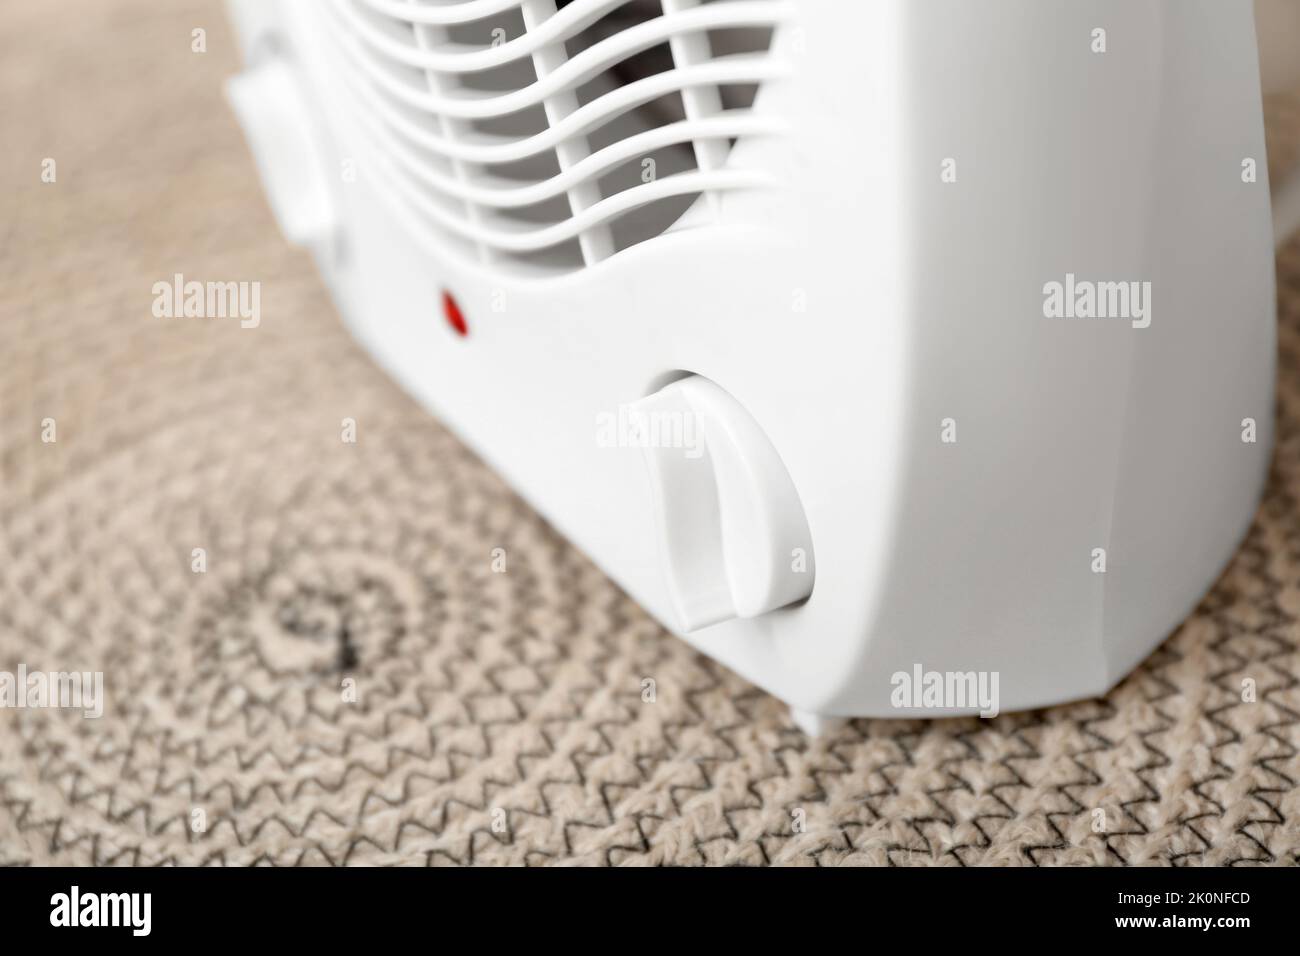 Electric fan heater on rug, closeup Stock Photo